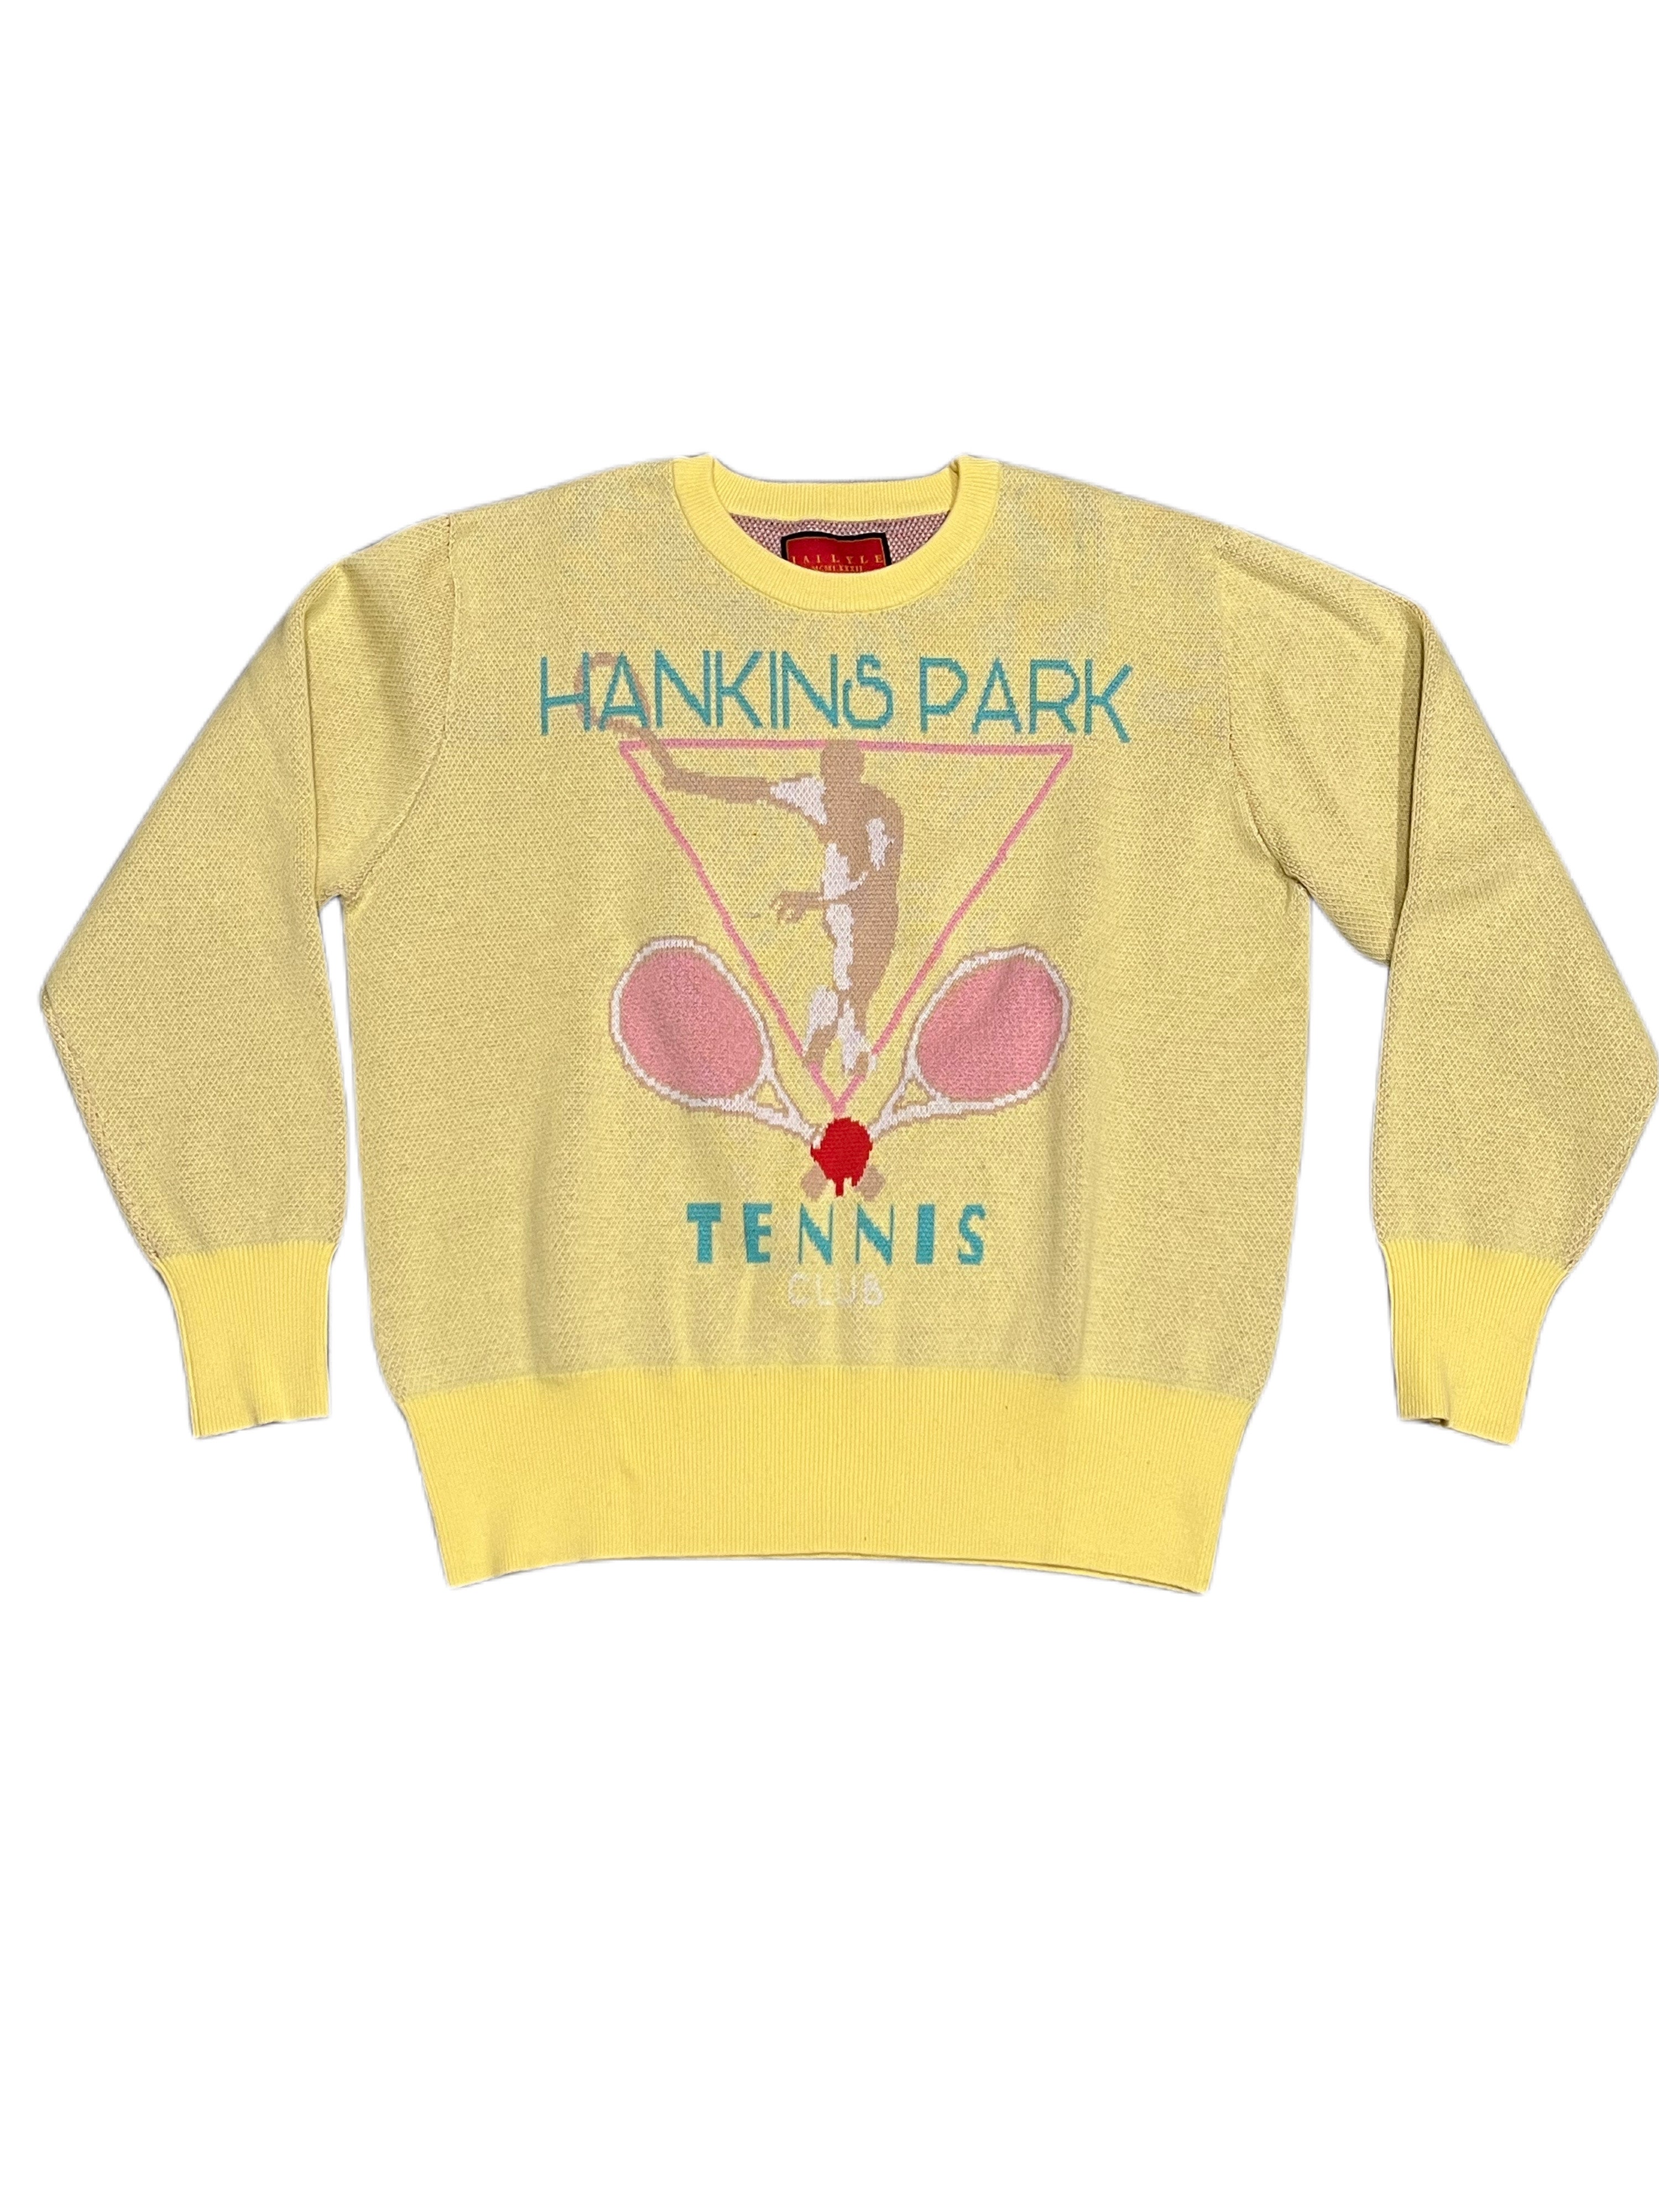 HANKINS PARK TENNIS SWEATER